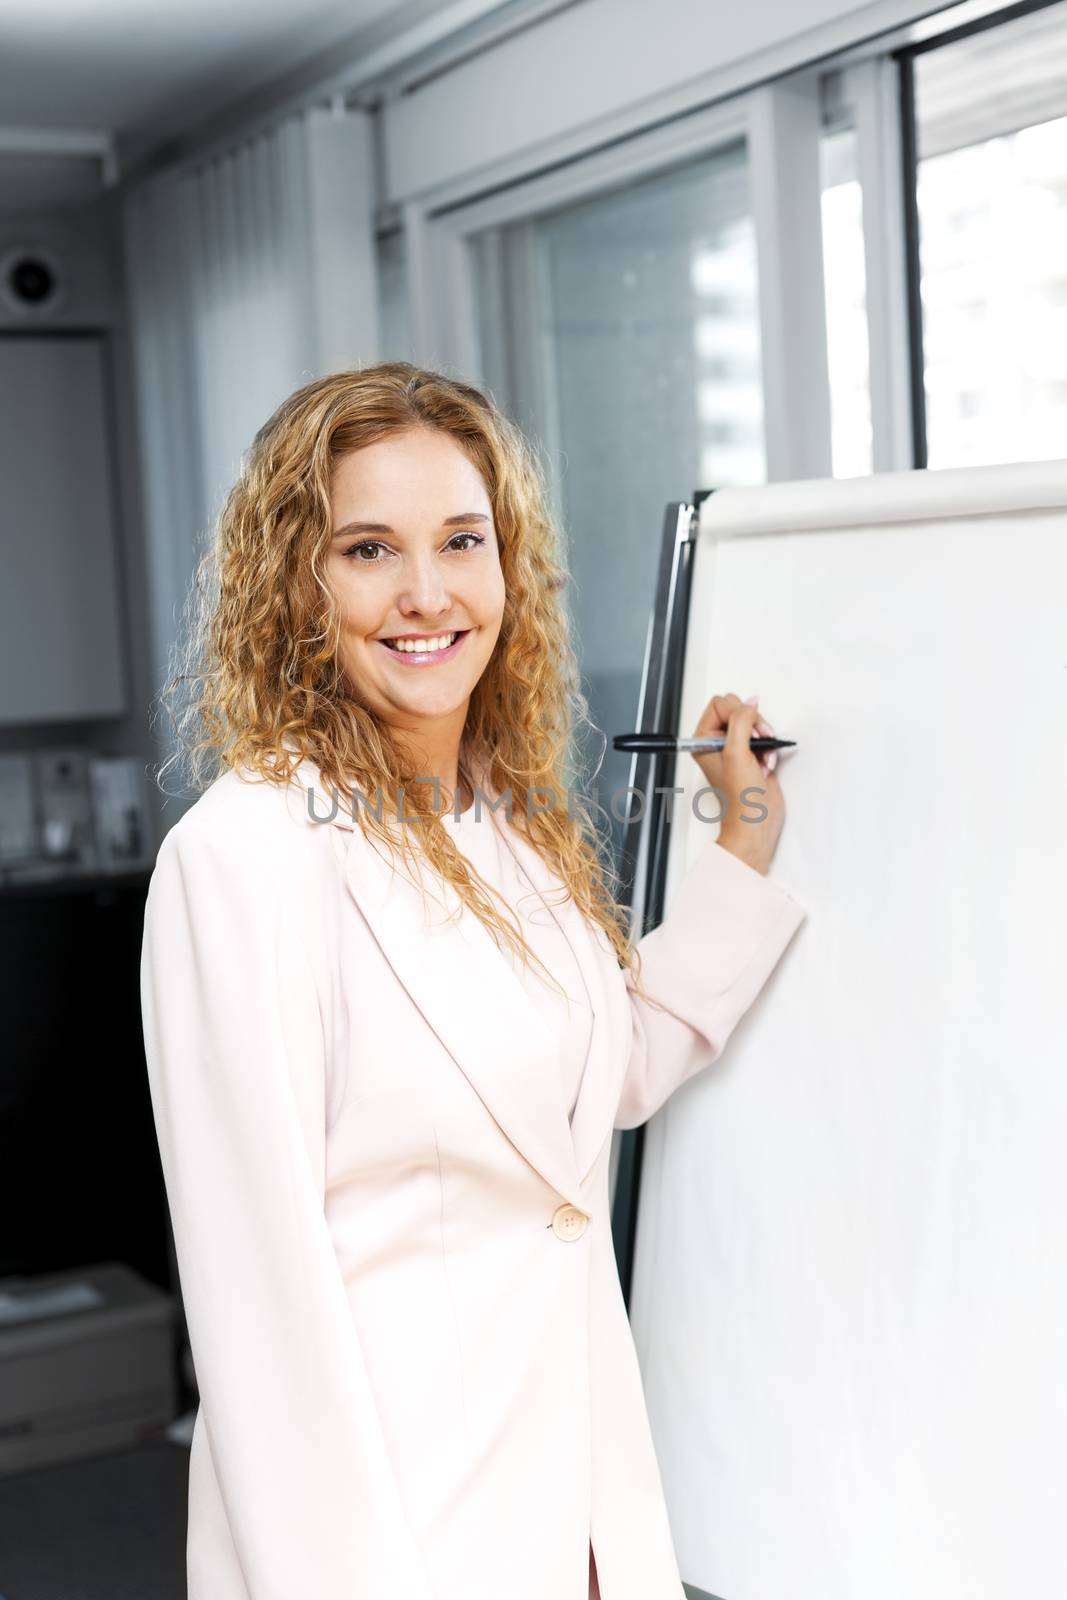 Business woman writing on flip chart by elenathewise